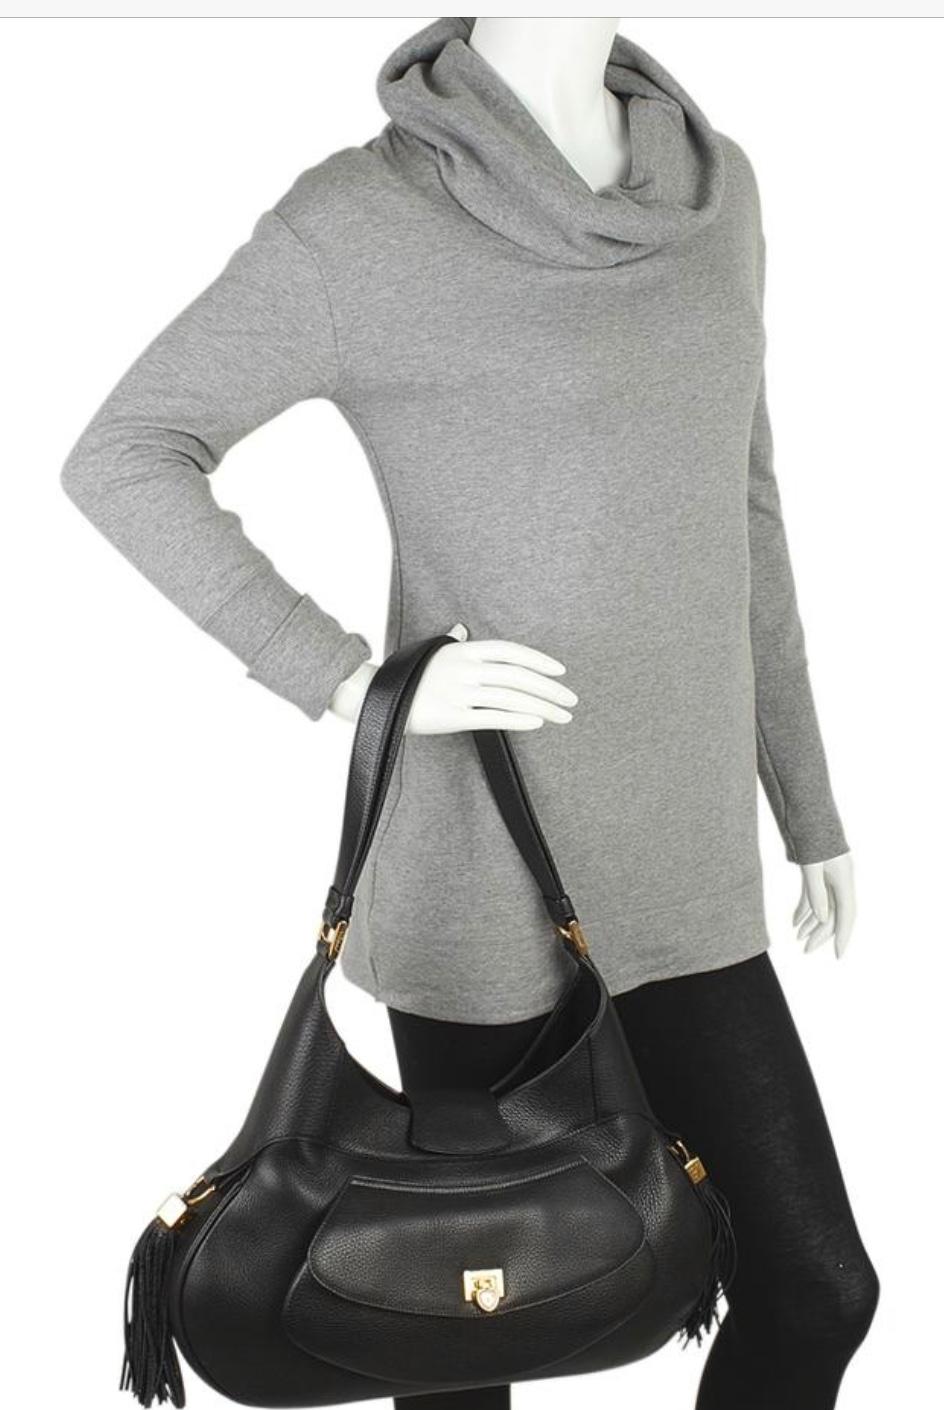 Chopard Madrid Black Calfskin Leather Handbag, Brand New 2